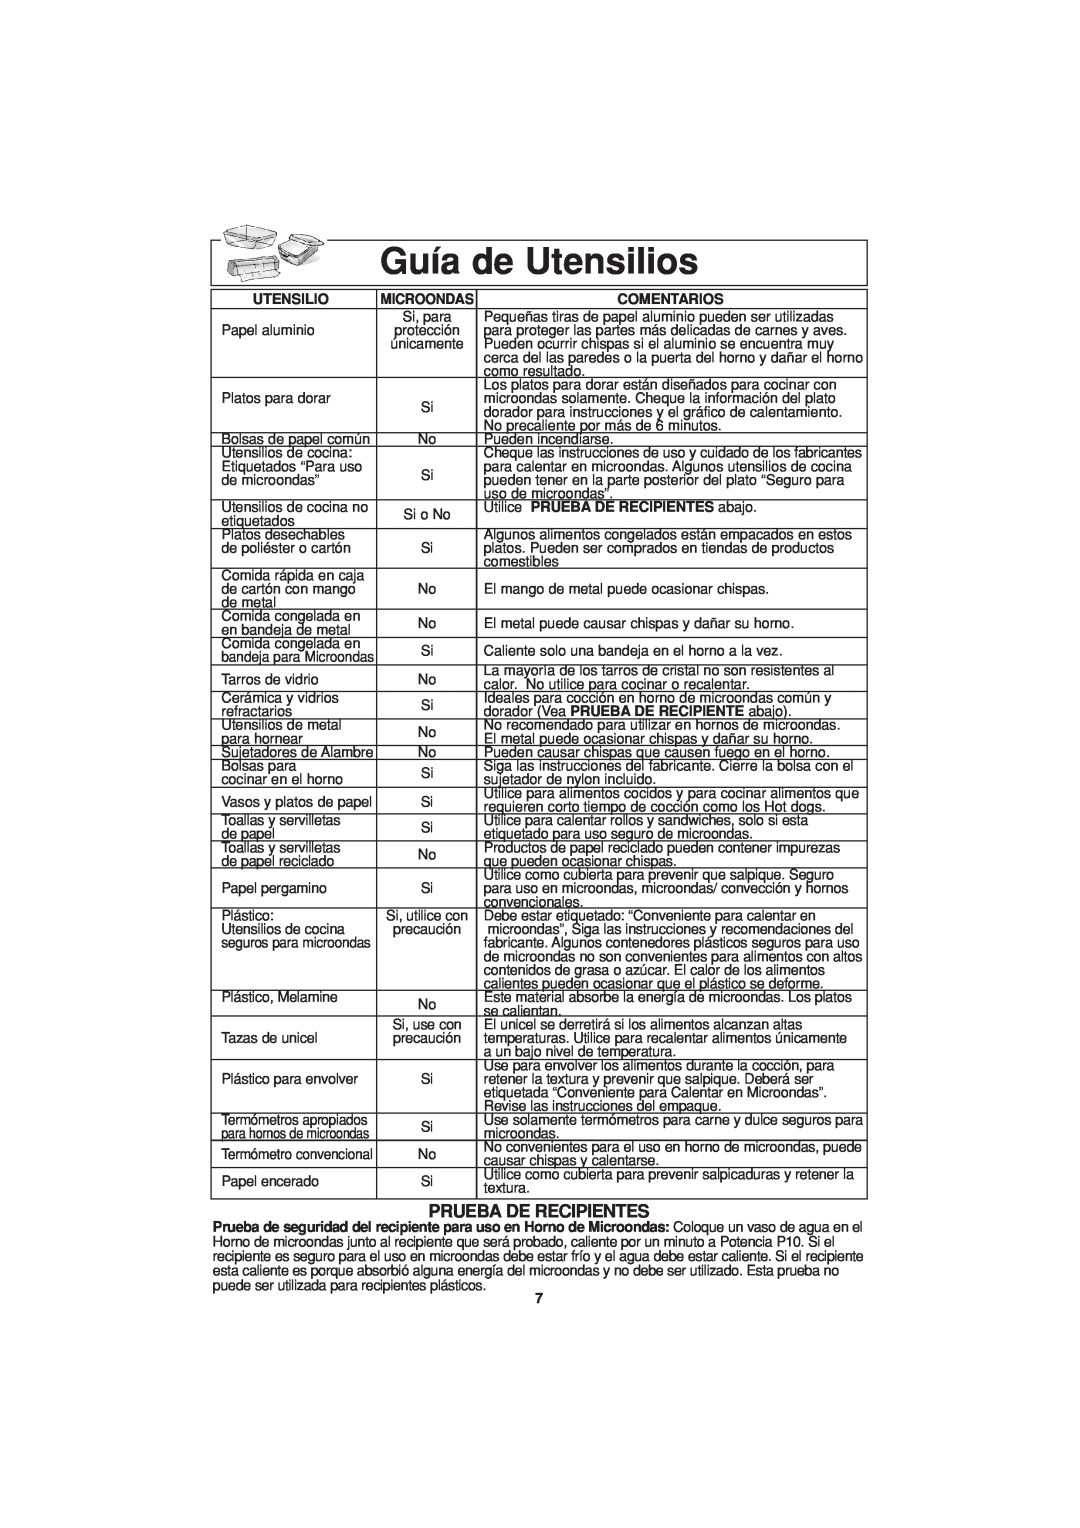 Panasonic NN-H634, NN-H644 important safety instructions Guía de Utensilios, Prueba De Recipientes 